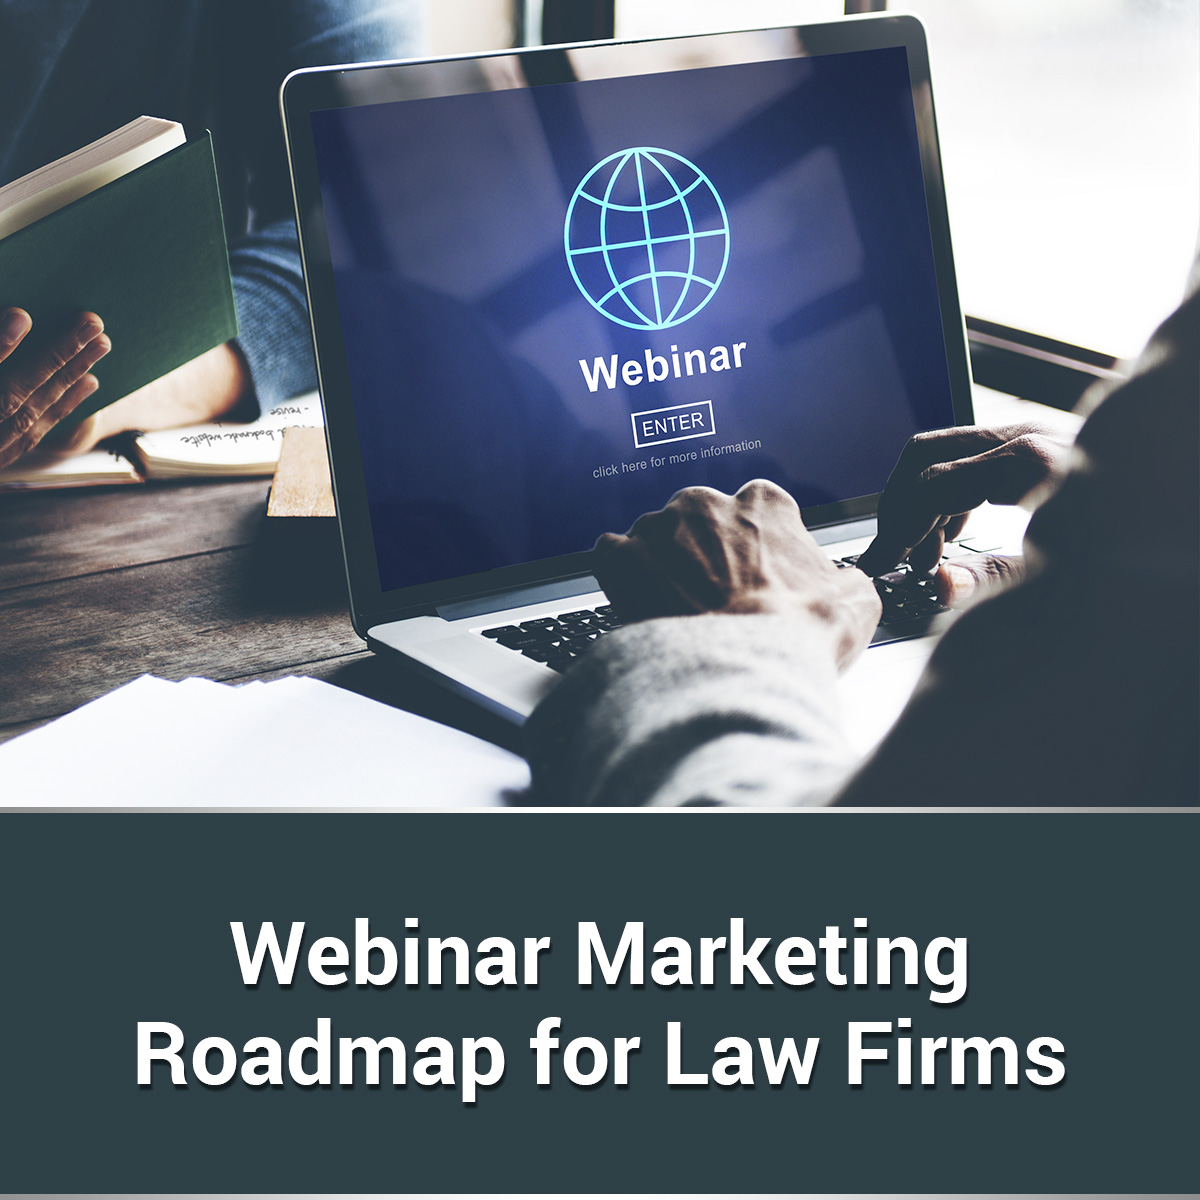 Webinar Marketing Roadmap for Law Firms Legal Marketing Review